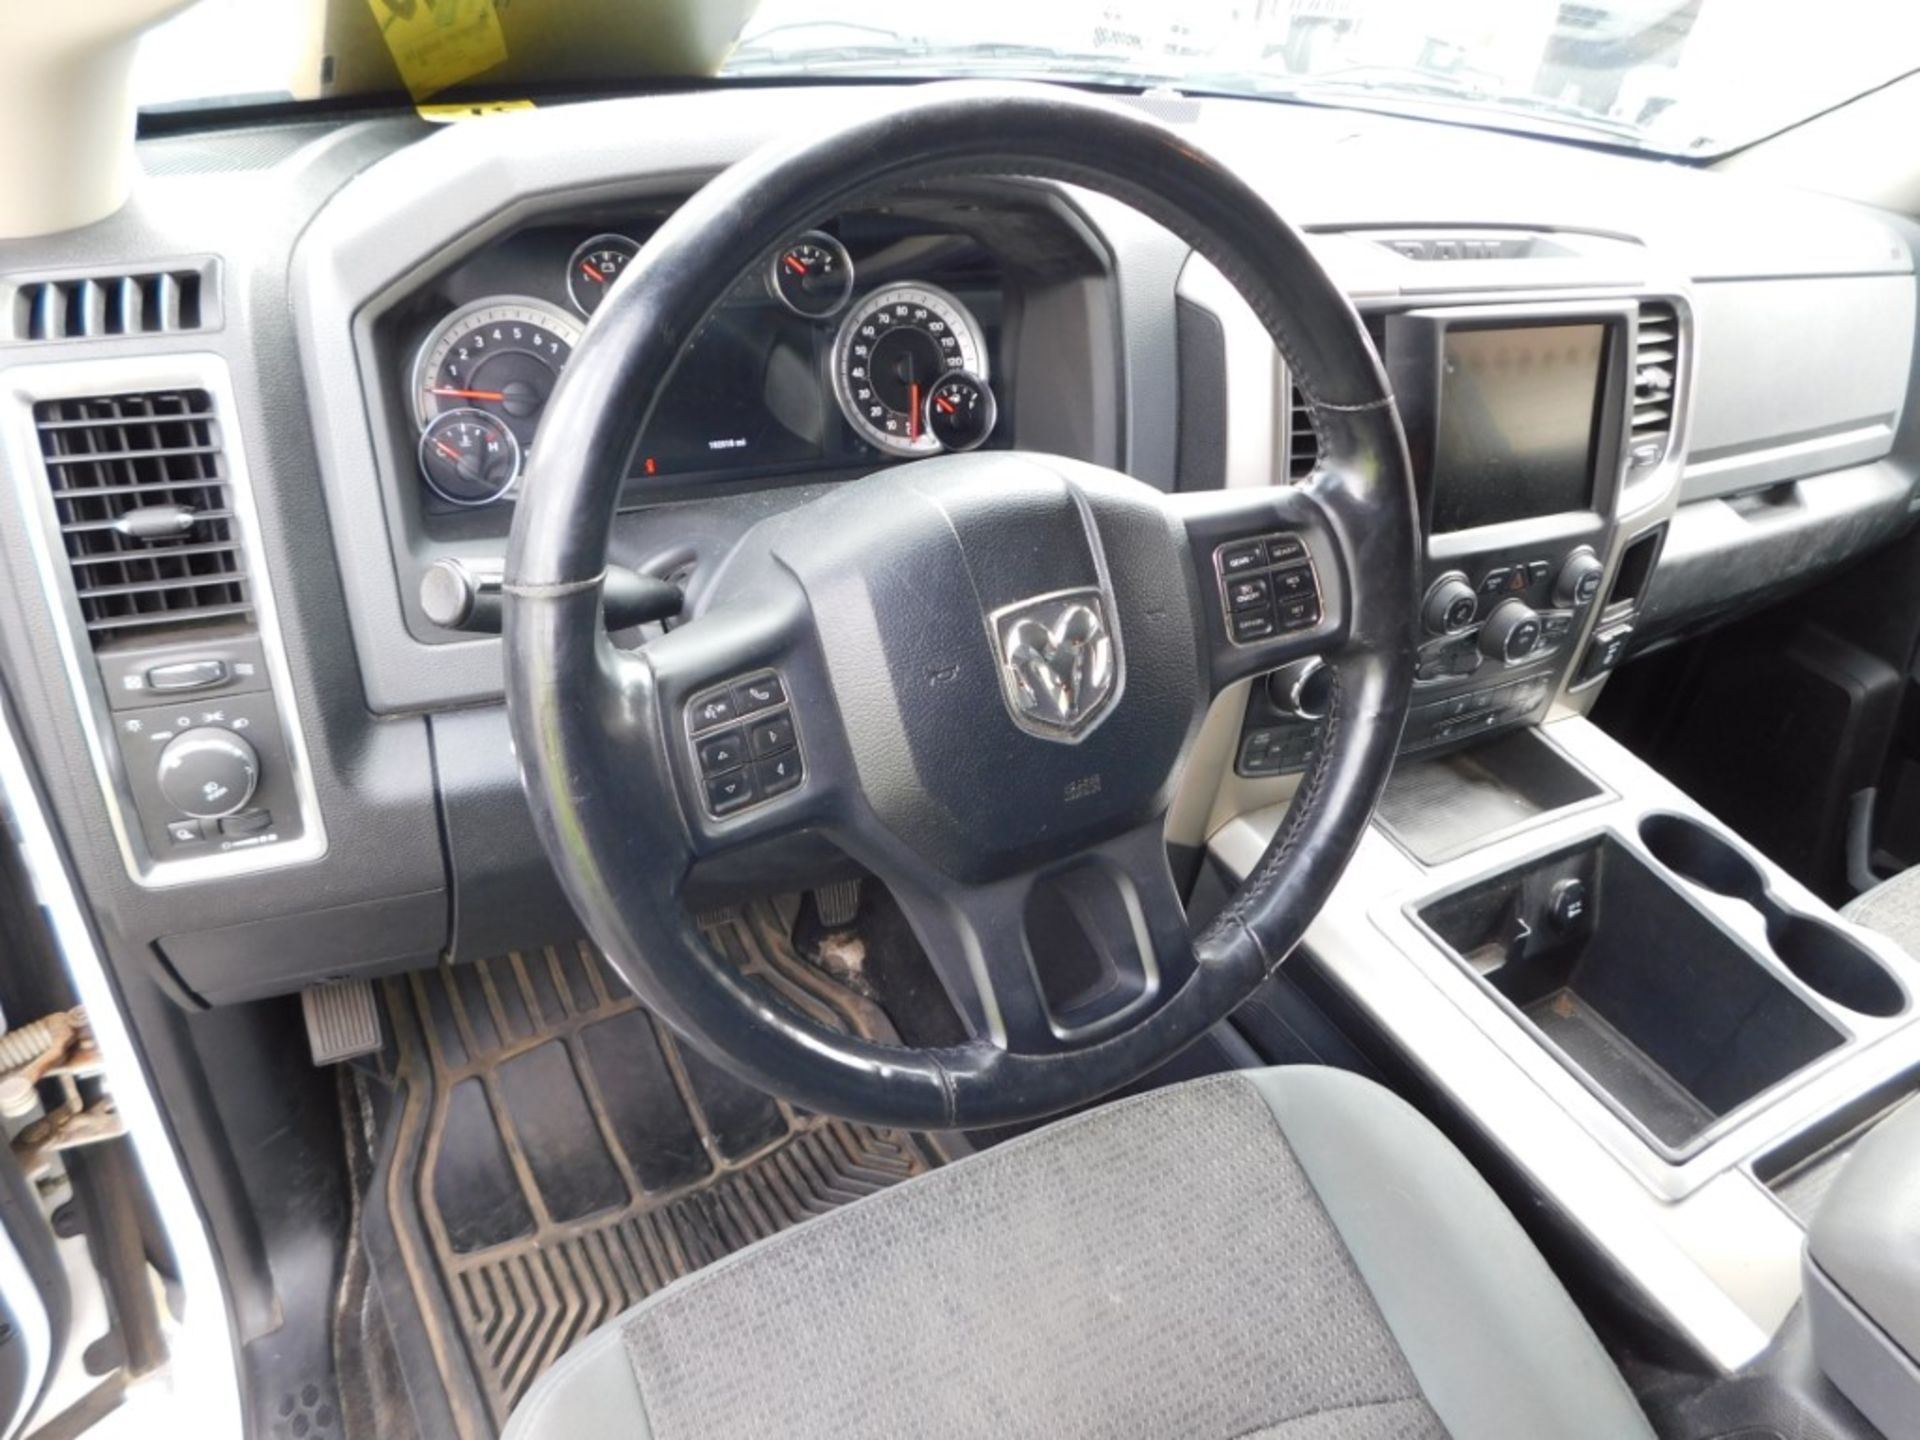 2014 Dodge Ram 1500 Pickup VIN 1C6RR7LG0ES306150, Crew Cab, 4 WD, Automatic, Cruise Control, PW, PL, - Image 21 of 33